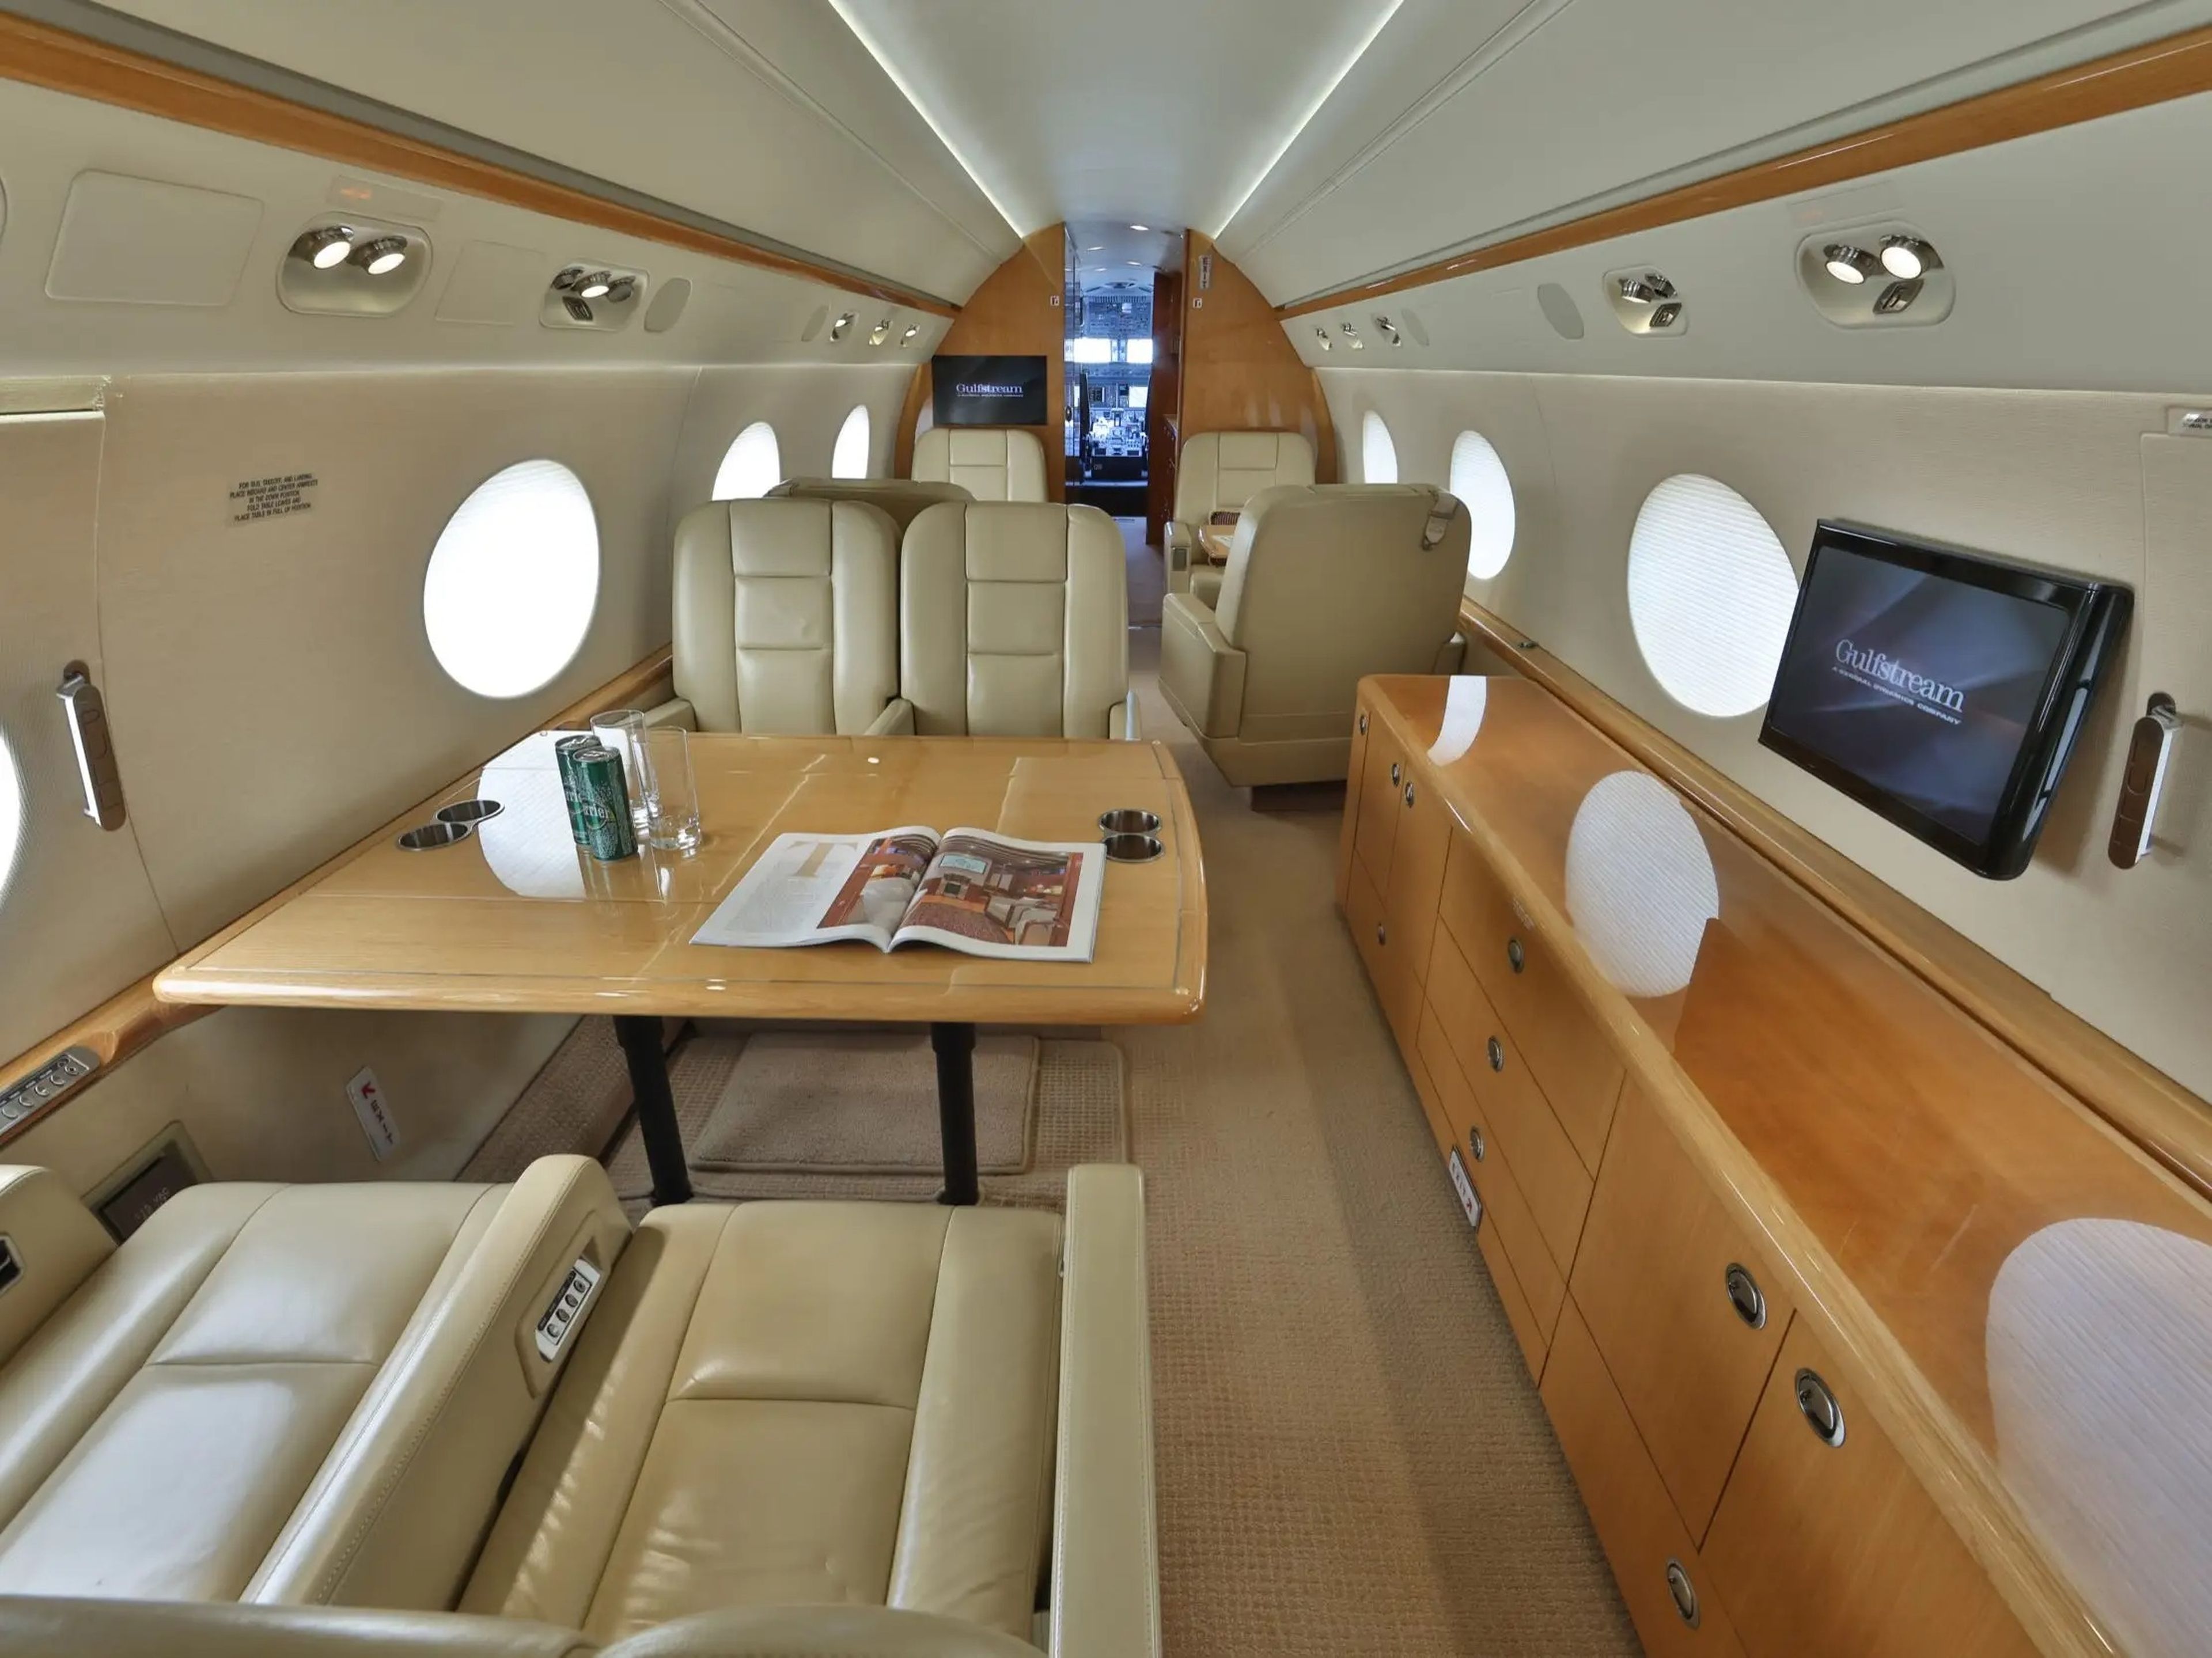 Jet privado Gulfstream G550.